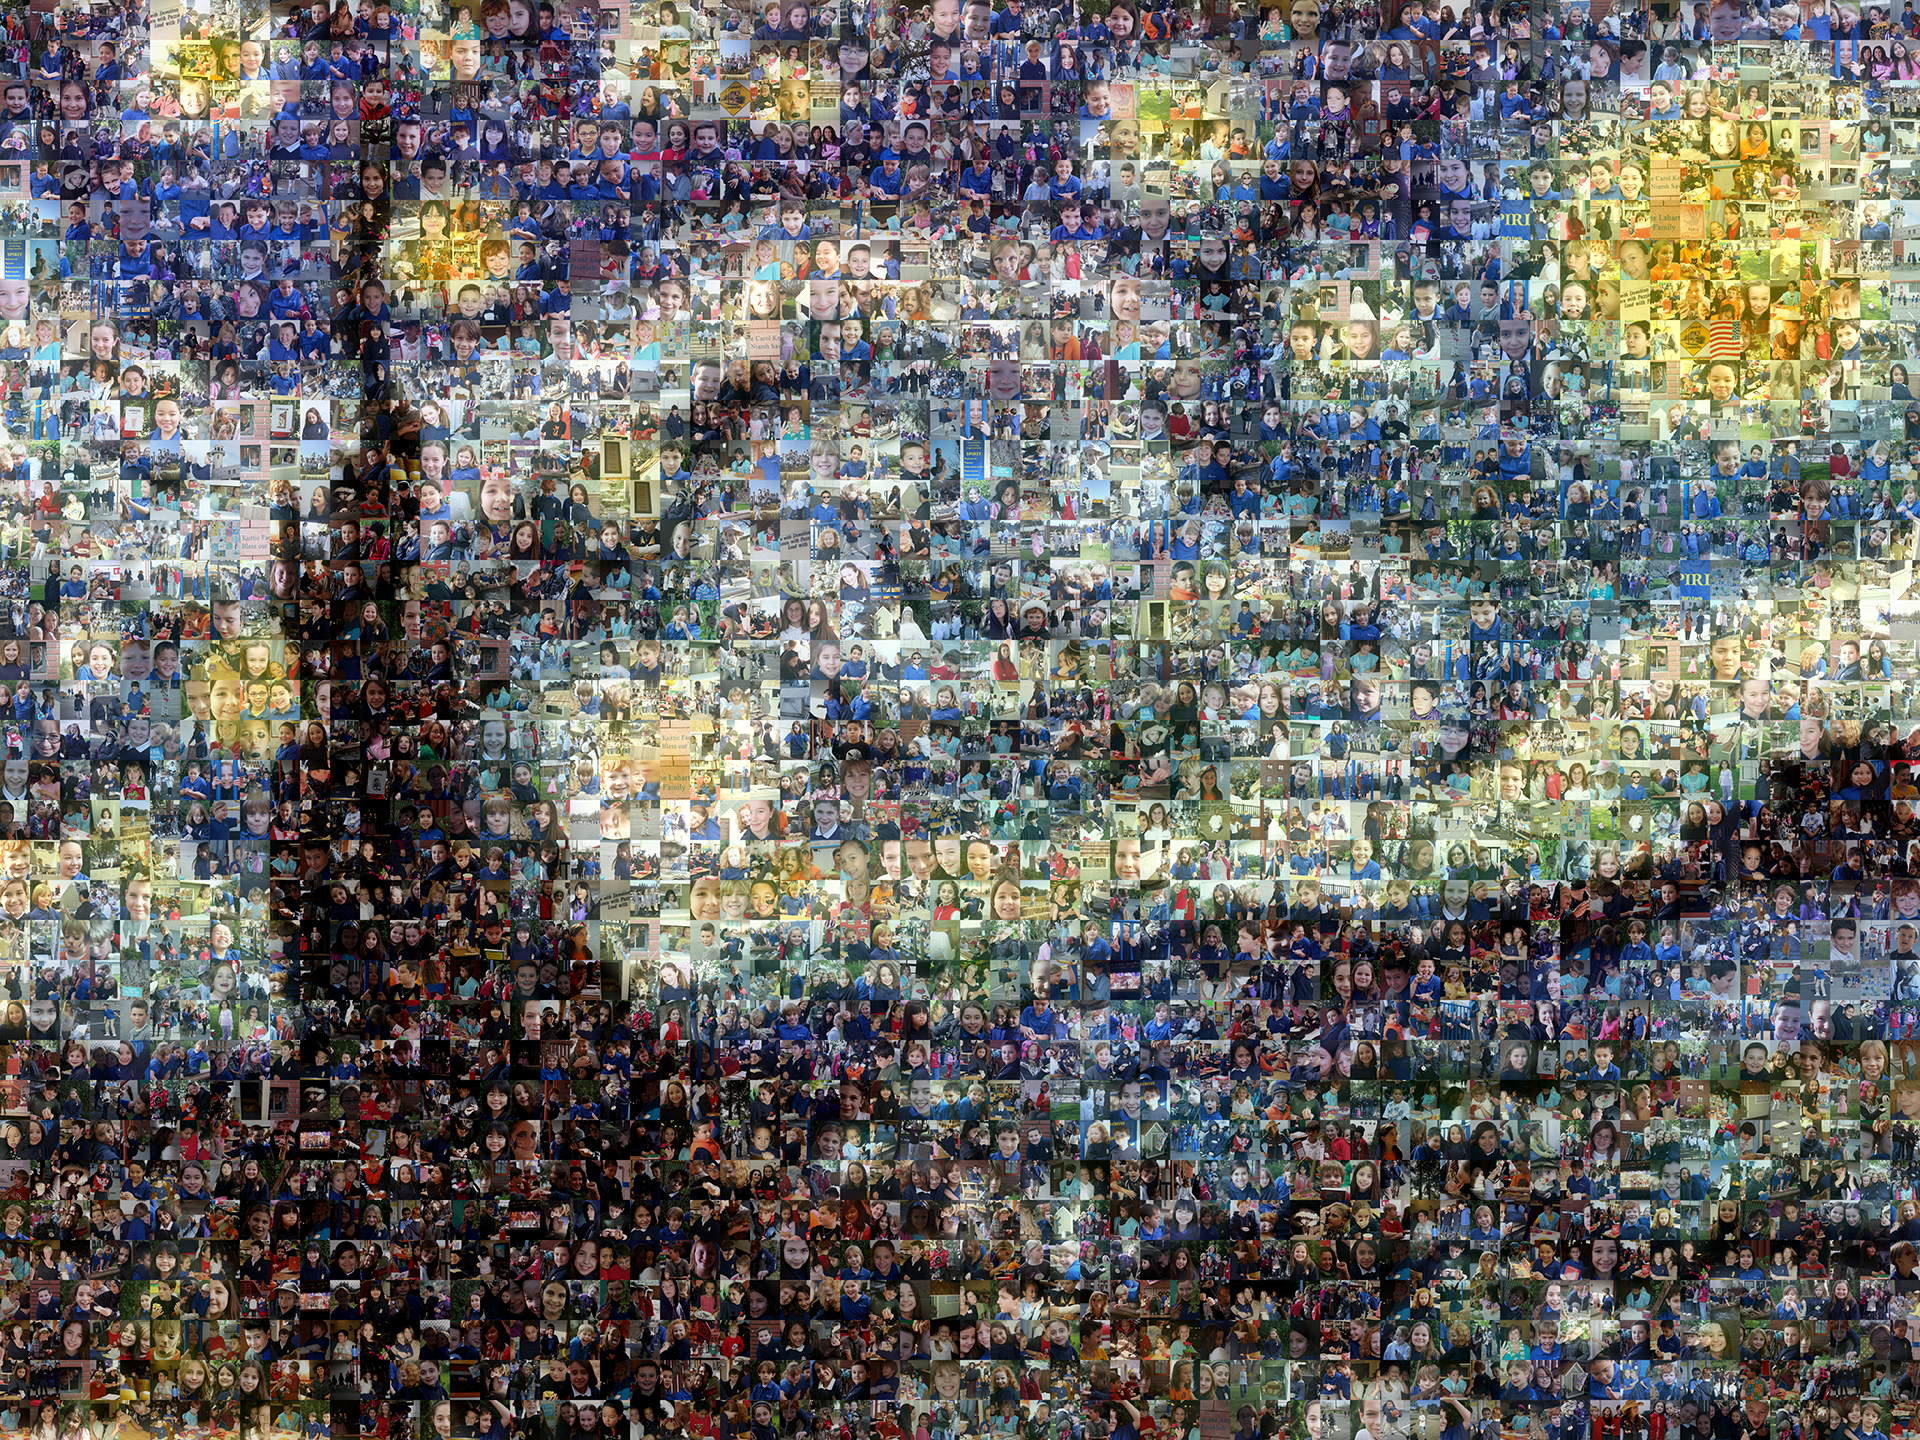 photo mosaic created using 1,535 student photos